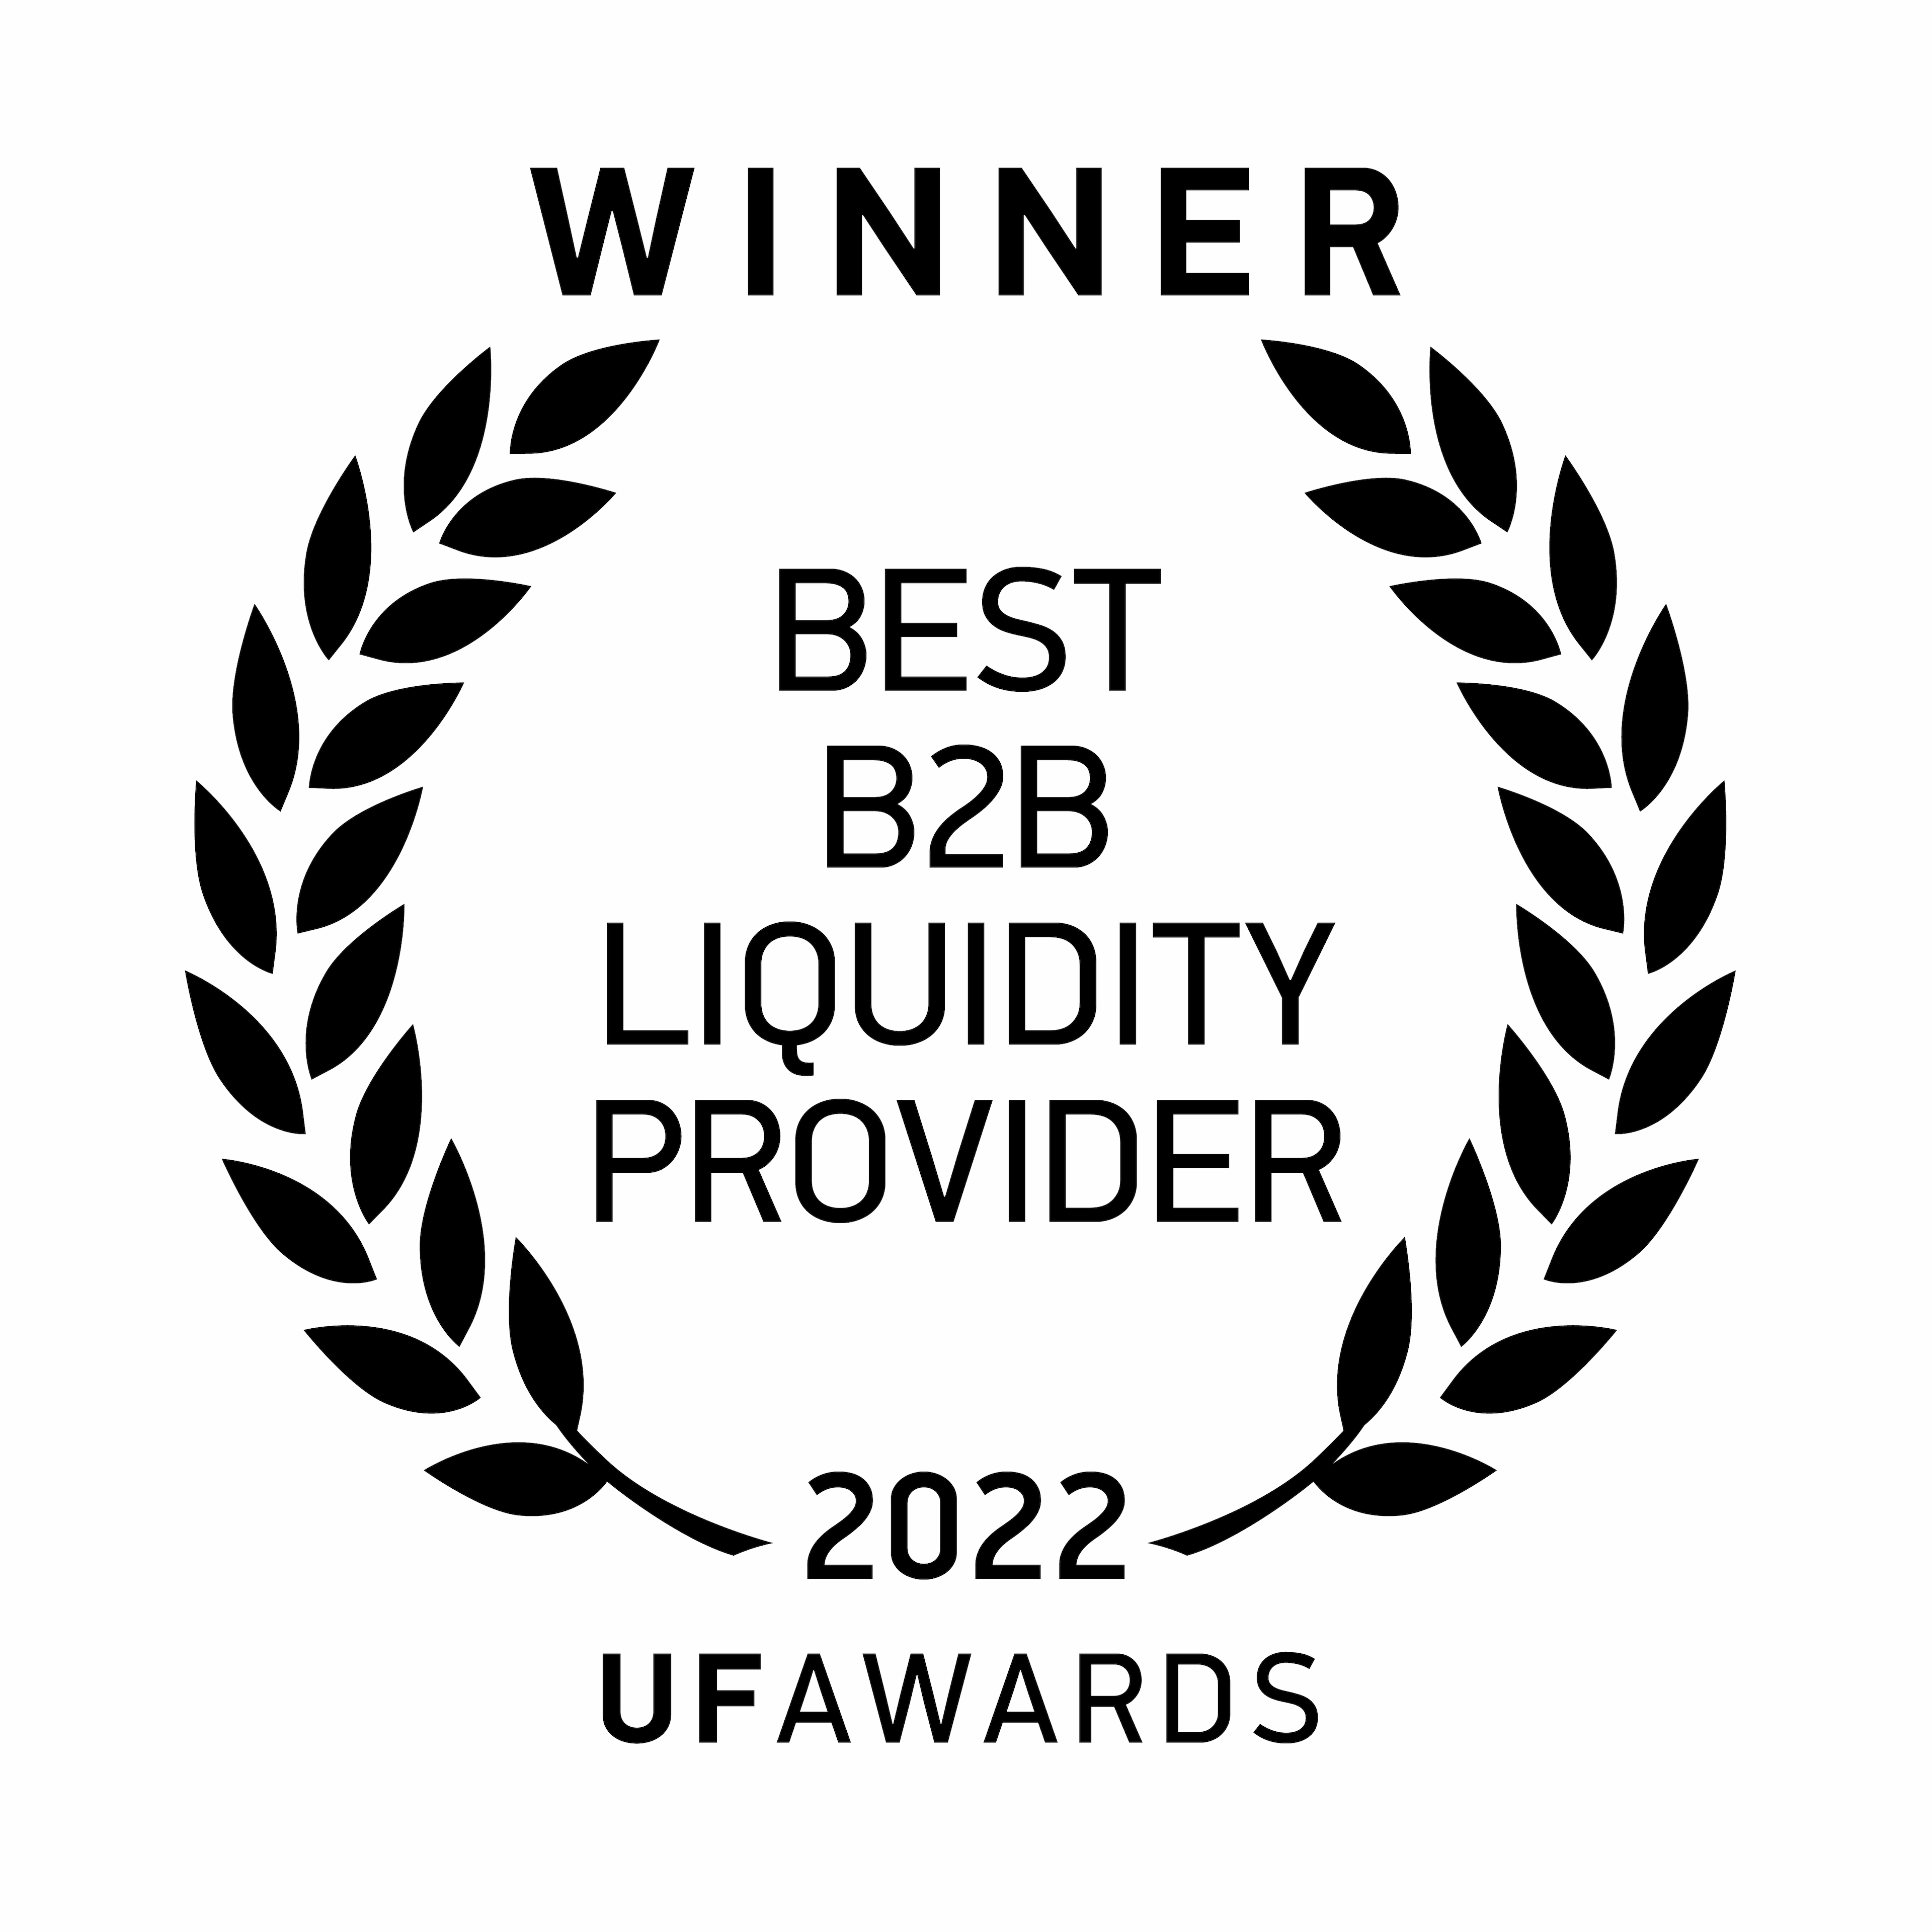 Finalto award: Best B2B Liquidity Provider 